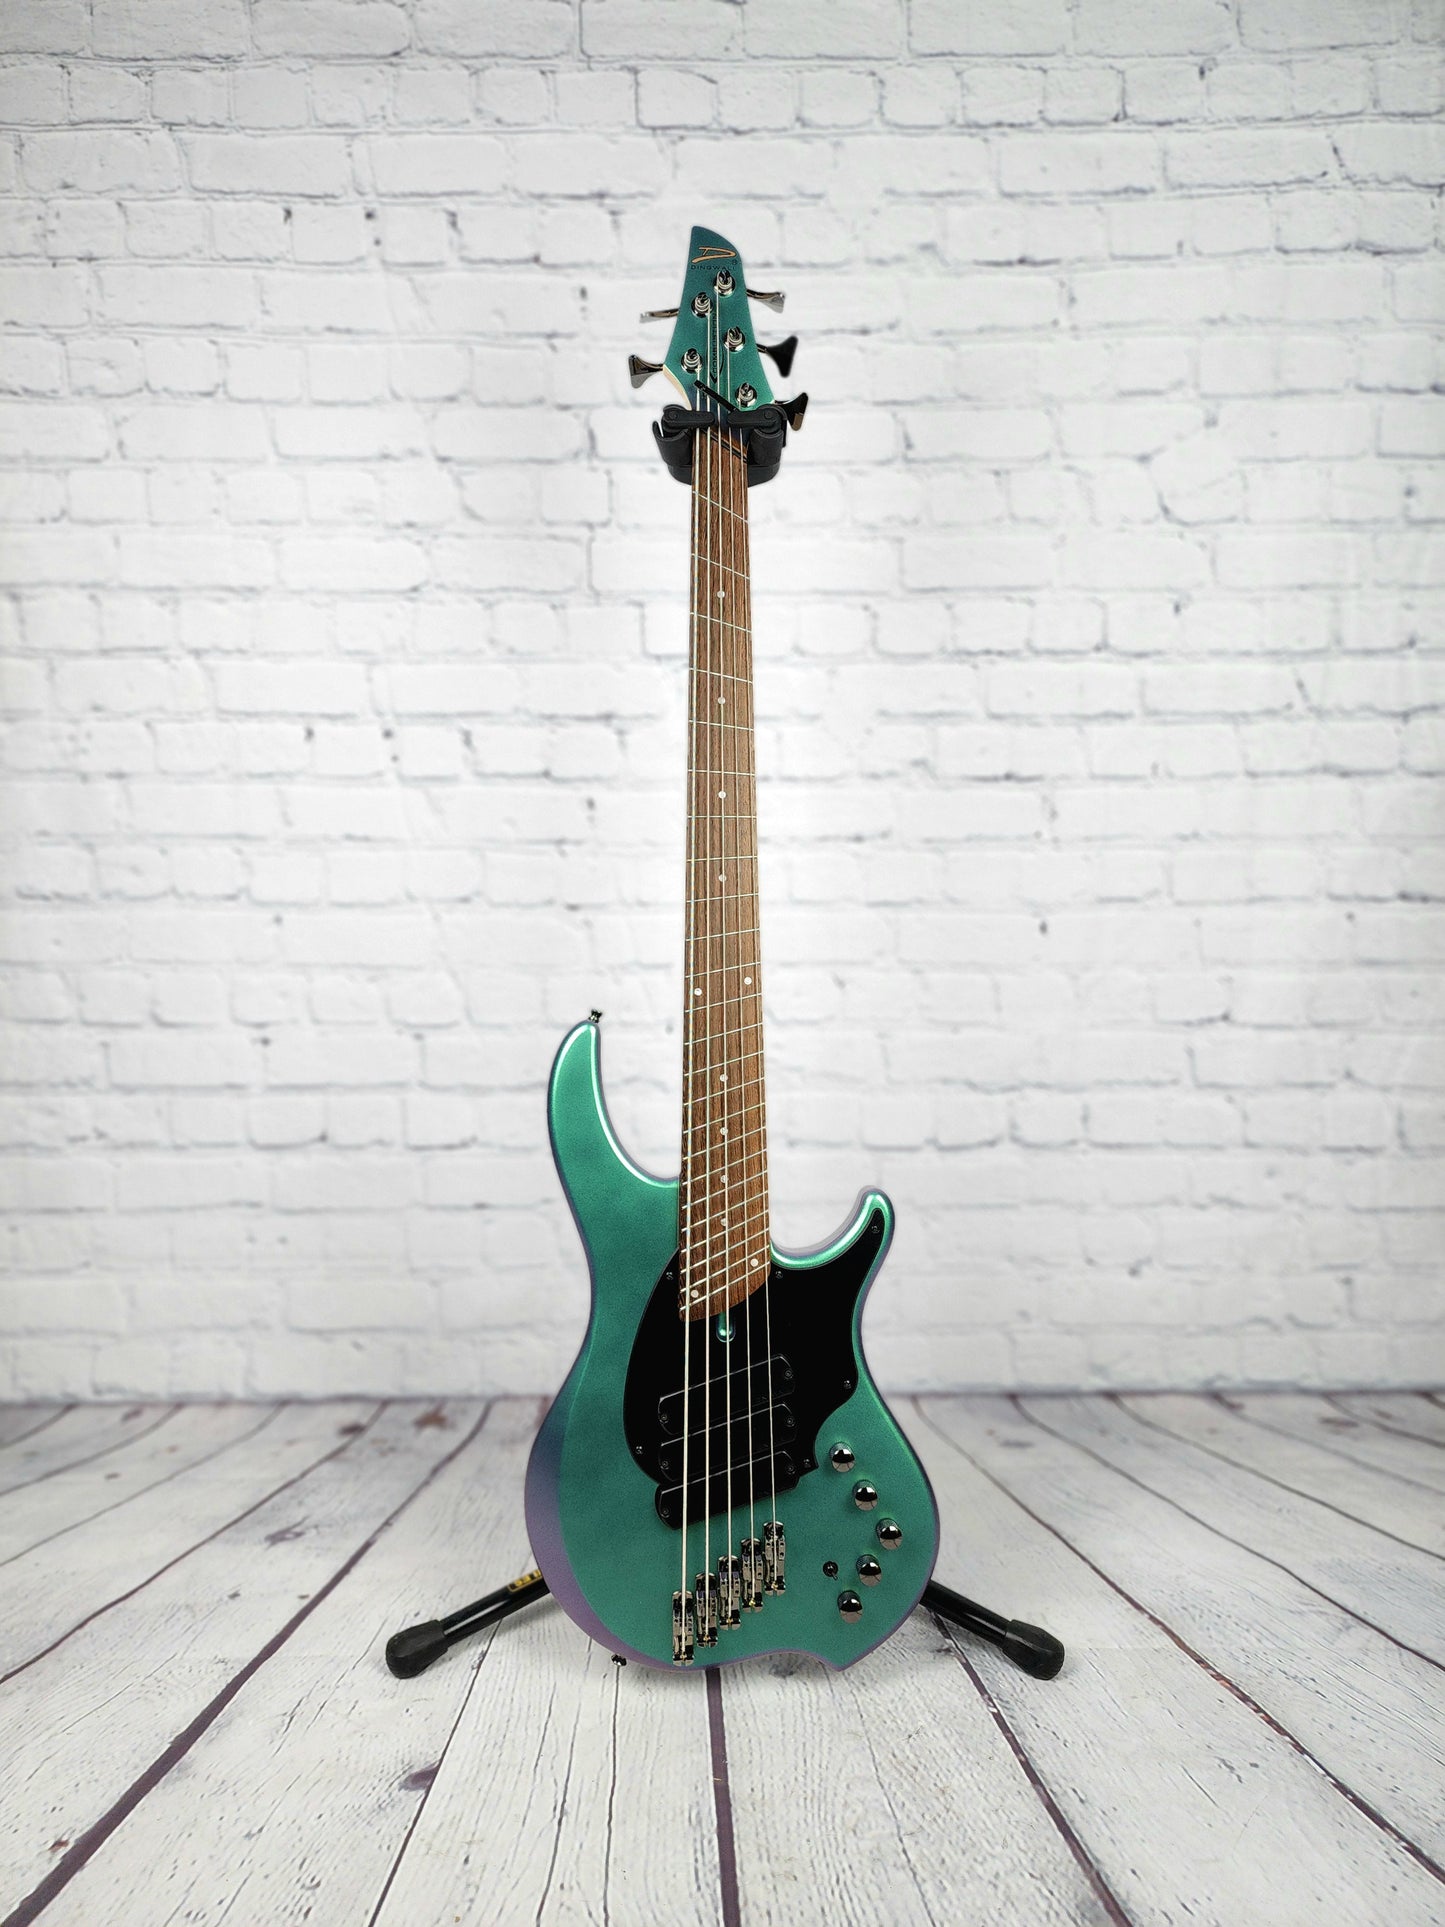 Dingwall Combustion Kyle Konkiel KK3 5 String Bass Guitar Green-to-Purple Color Shift